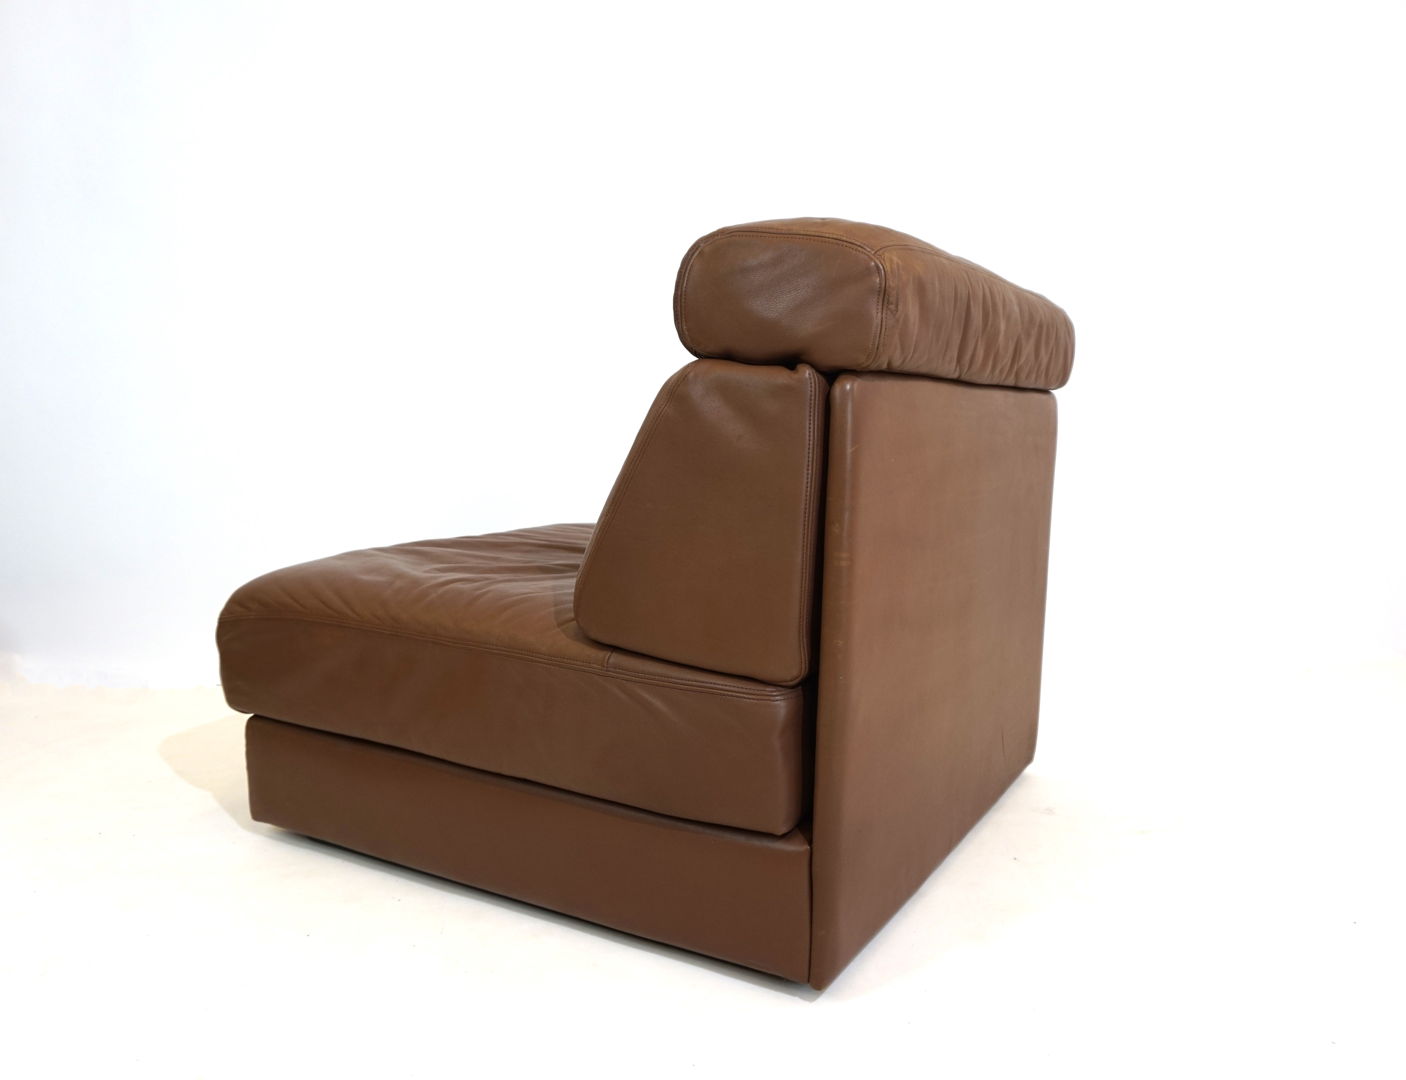 De Sede DS 77 leather modular sofa with ottoman